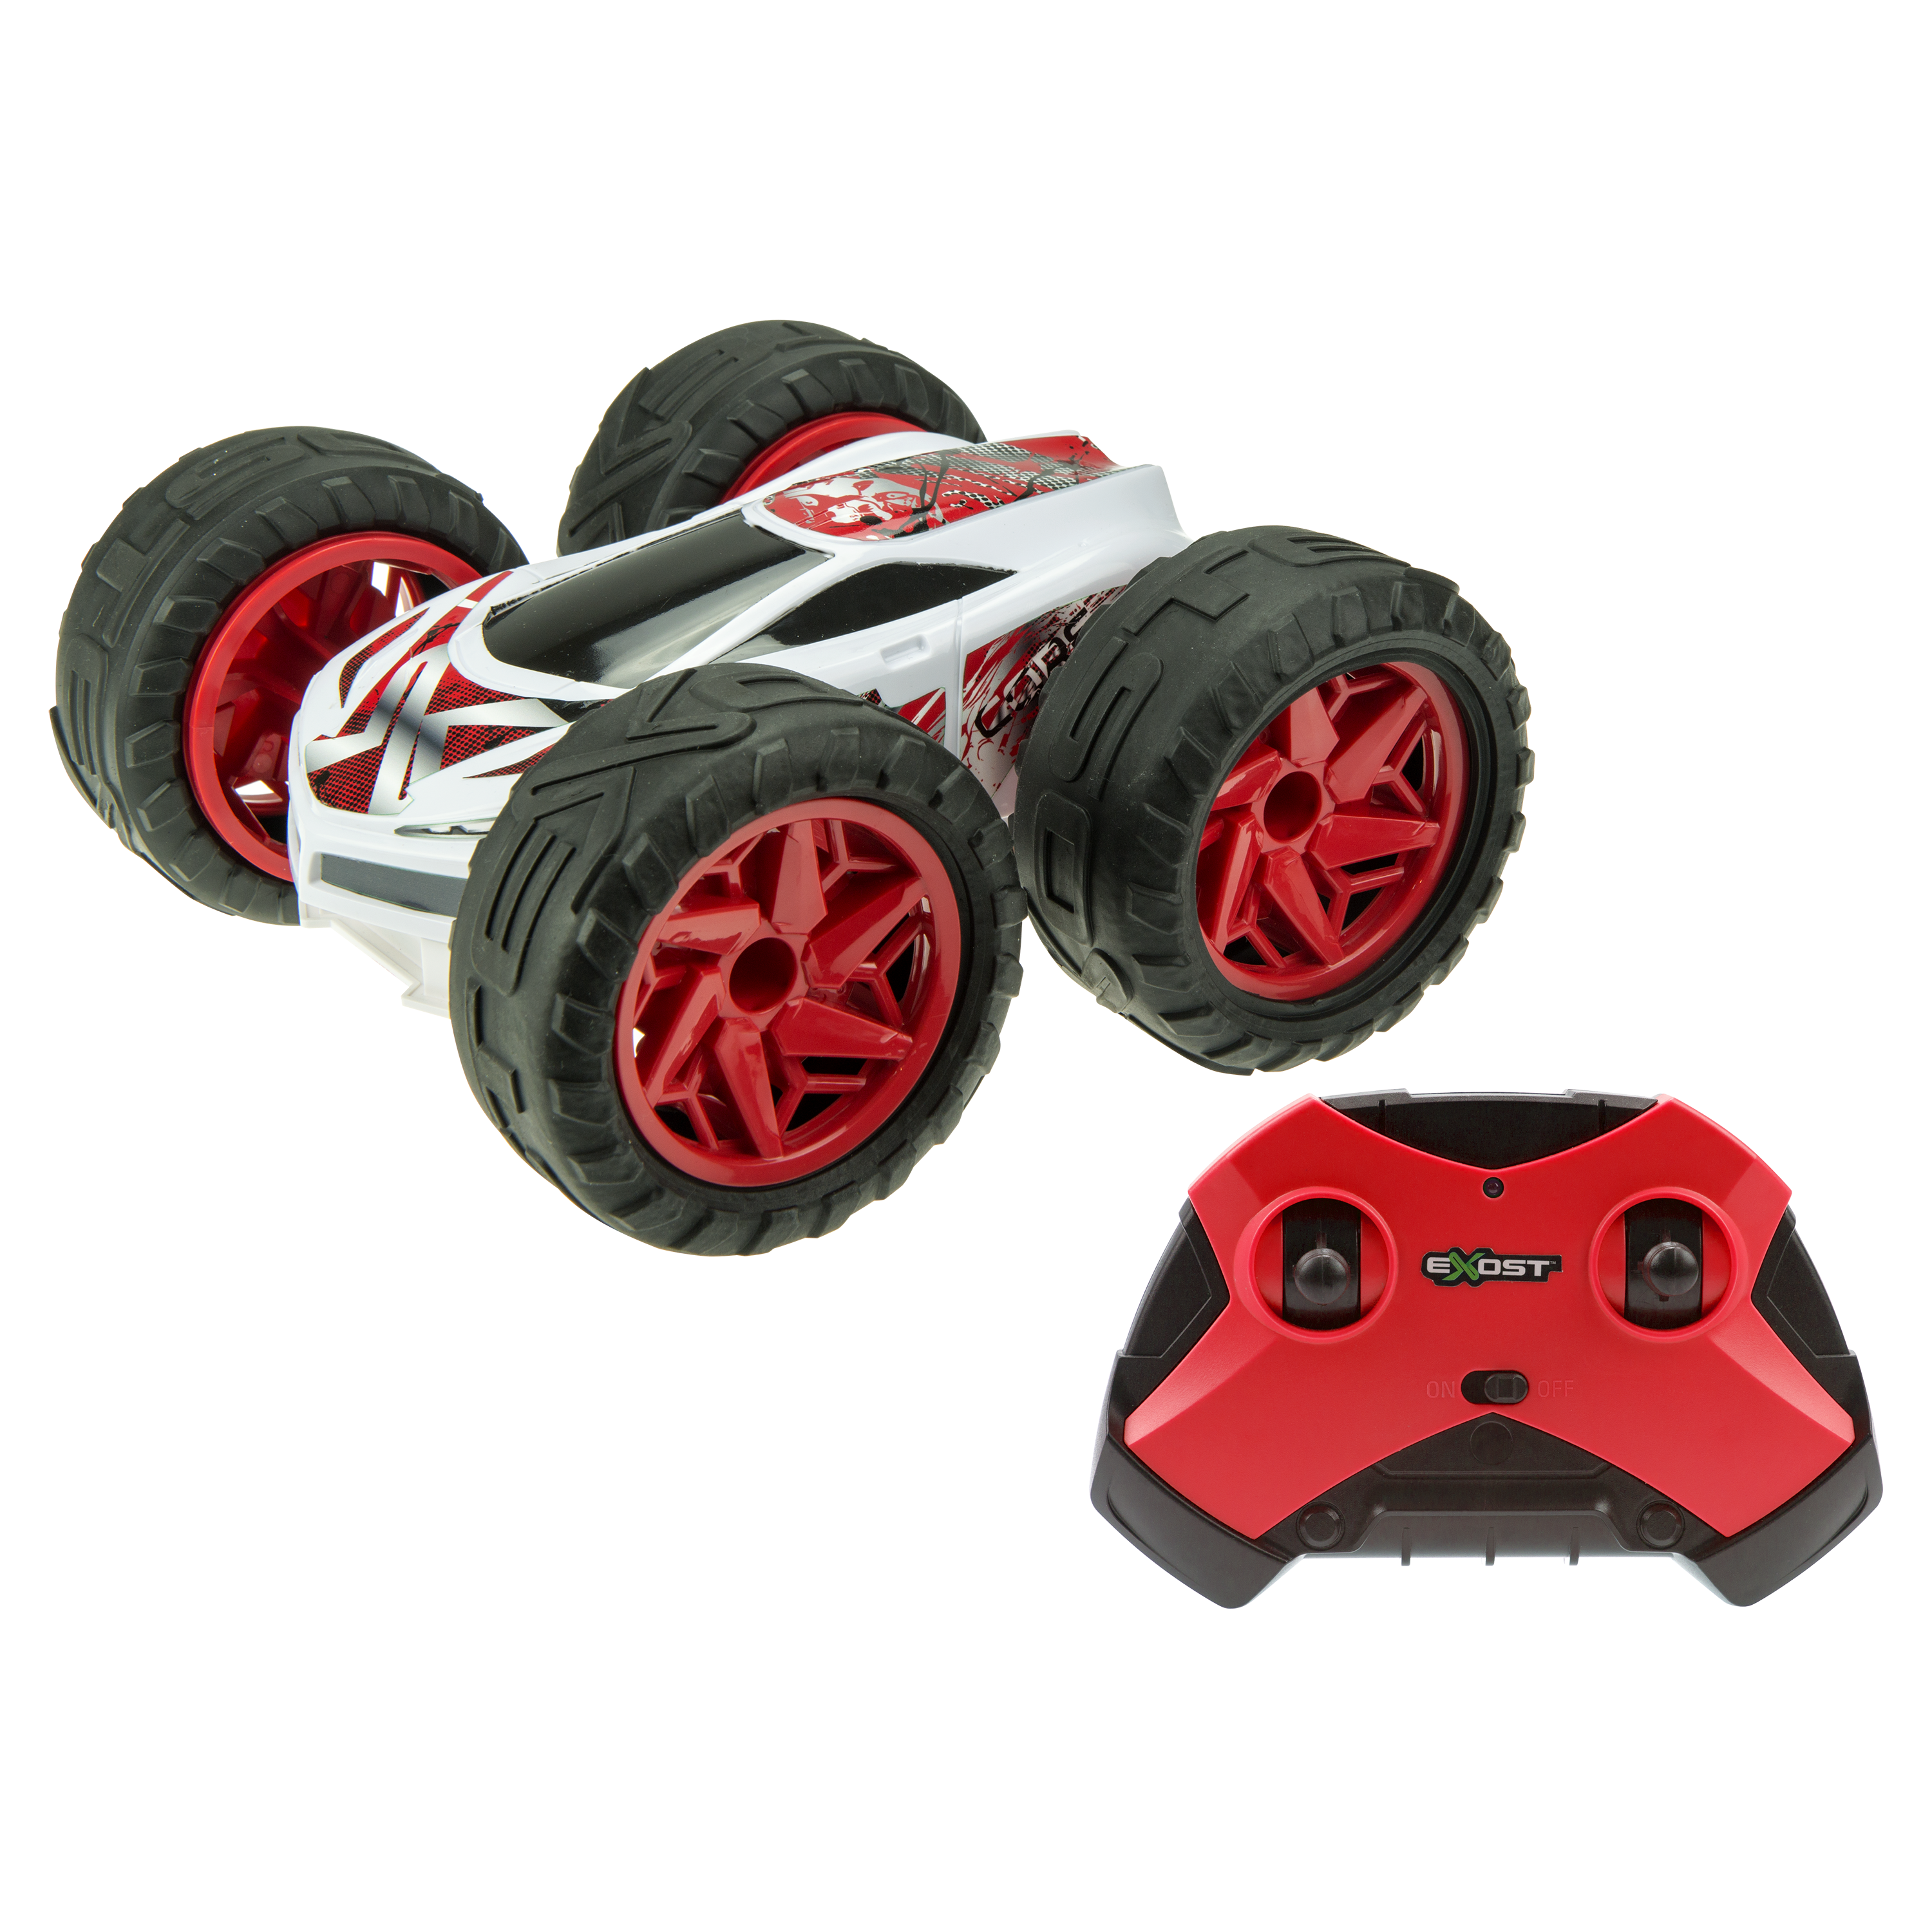 EXOST Gyrotex Auto balance RC CAR by Silverlit Toys 